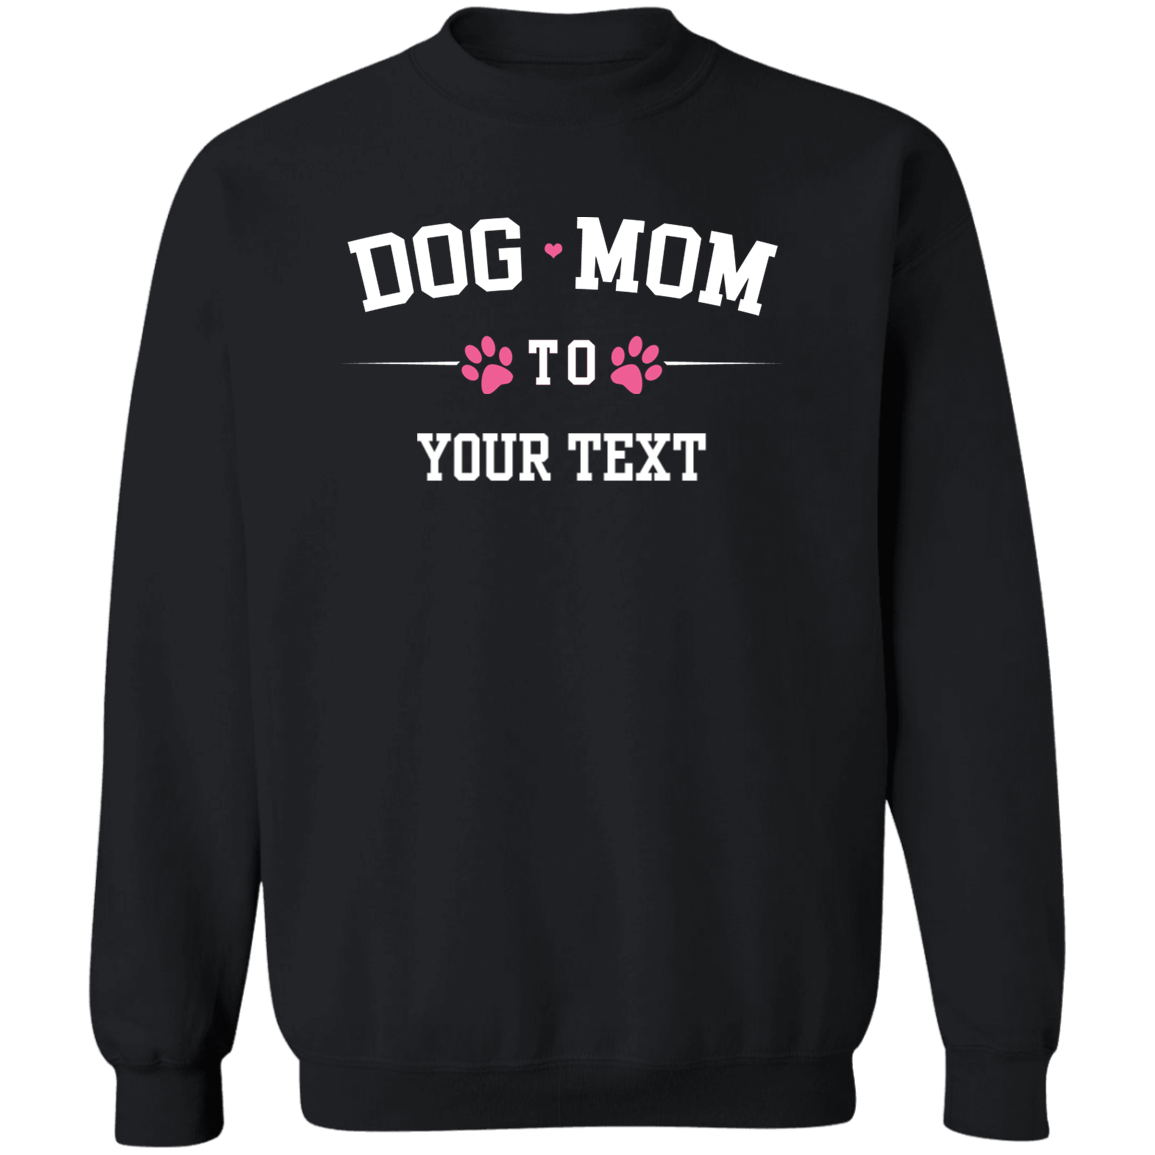 Personalized Dog Mom To - Sweatshirt.